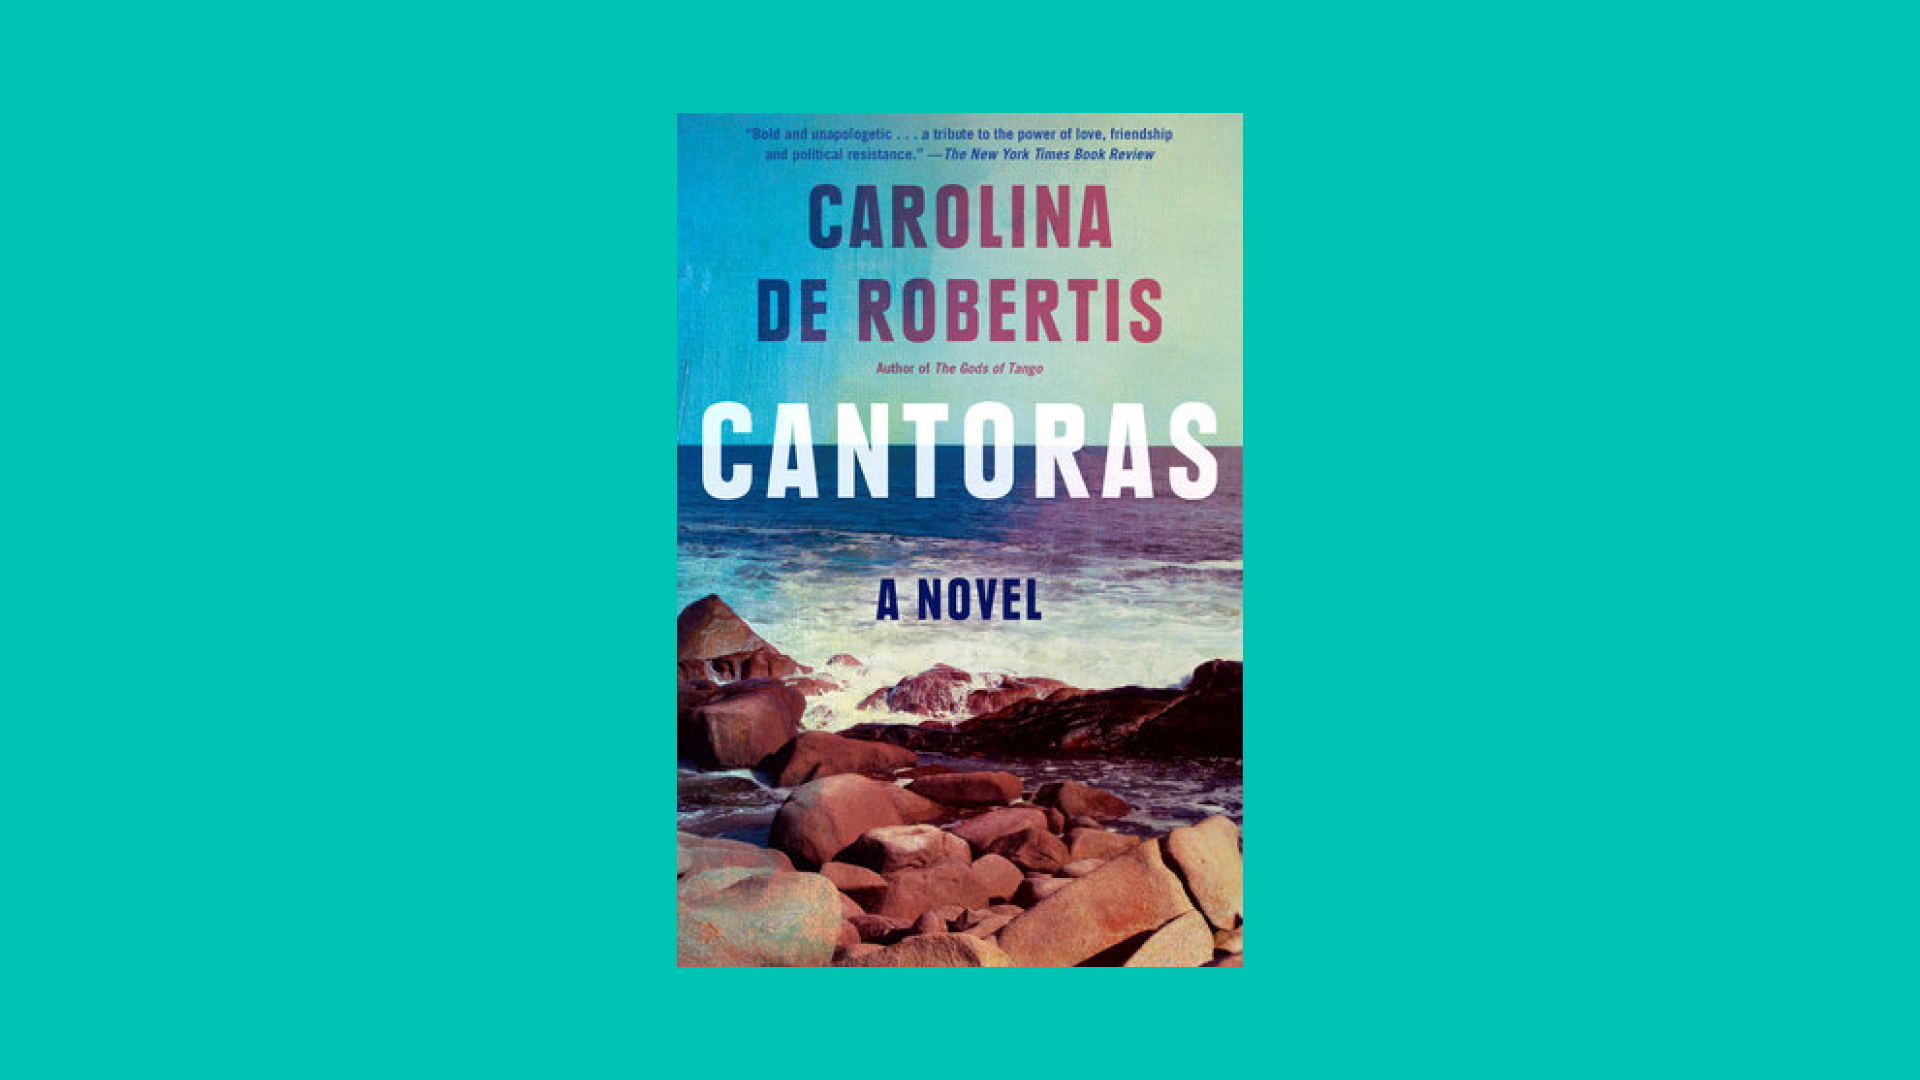 “Cantoras” by Carolina De Robertis 